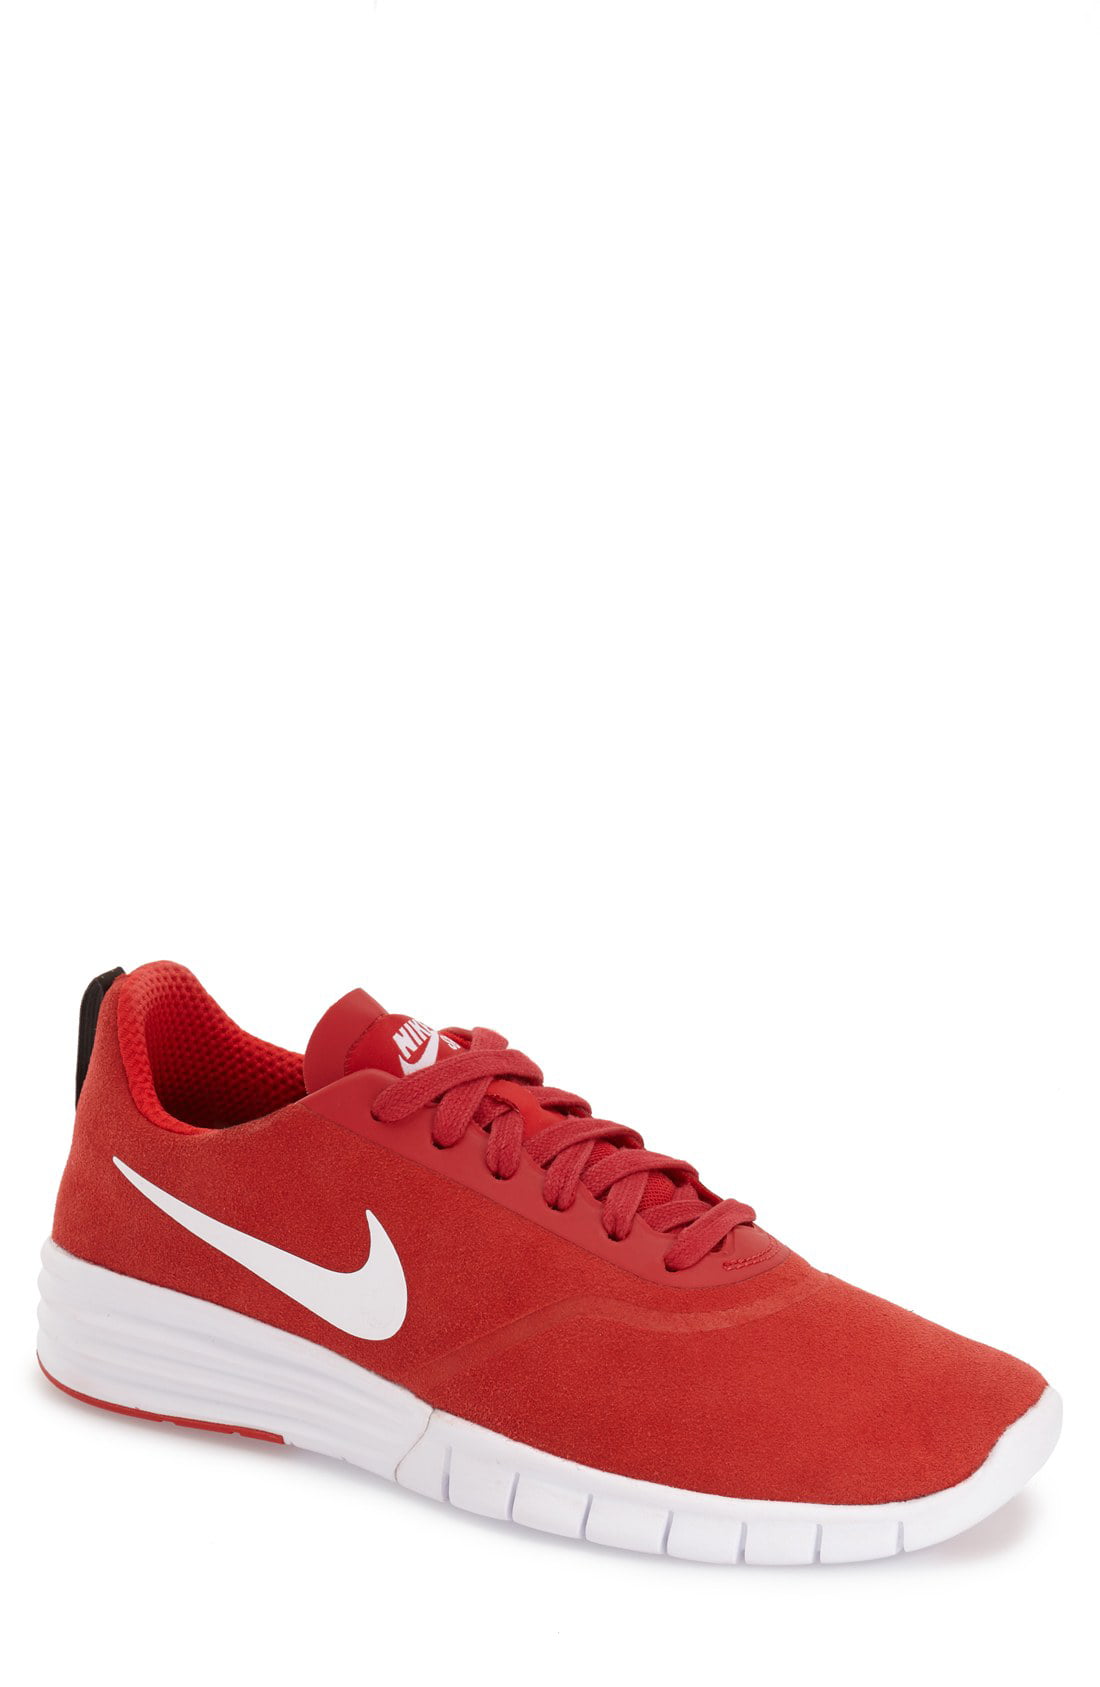 Fictief Verdikken Diplomatie Nike SB Lunar Paul Rodriguez 9 Red White Black Skateboarding Shoes -  Walmart.com